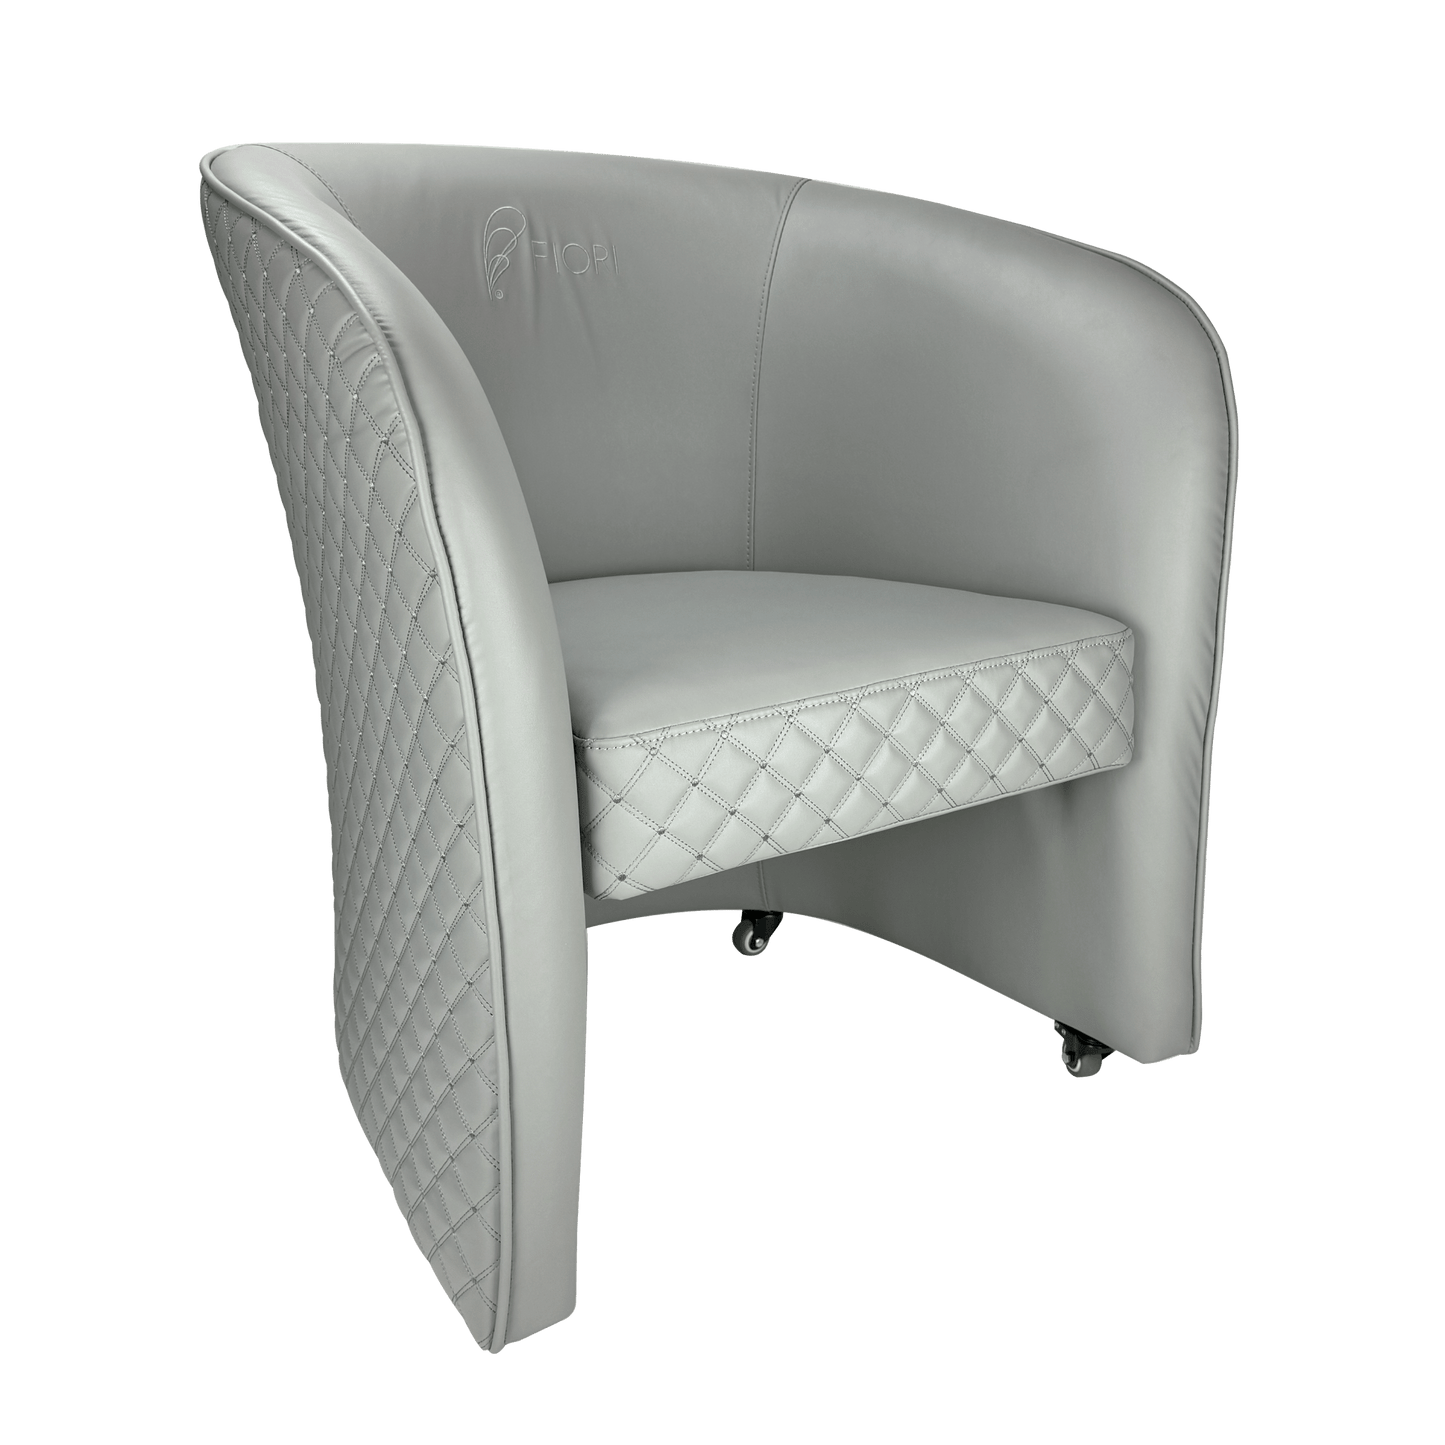 Fiori Relax Customer Chairs - W.S. Industries, Inc.